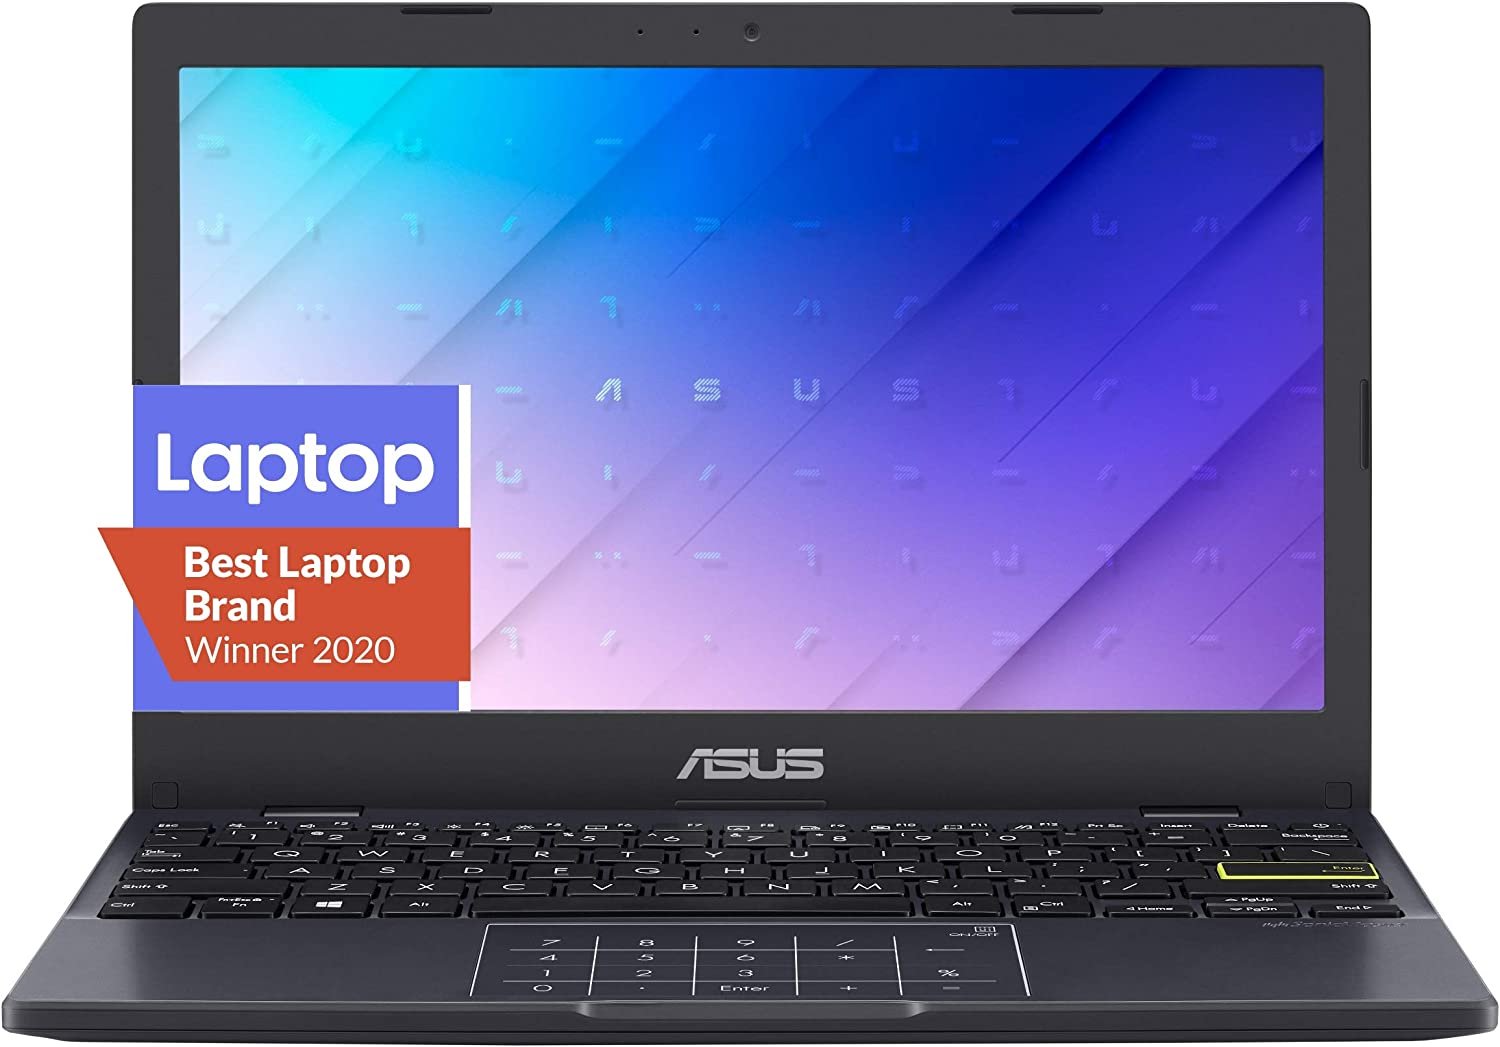 ASUS Vivobook Laptop L210 11.6” ultra thin